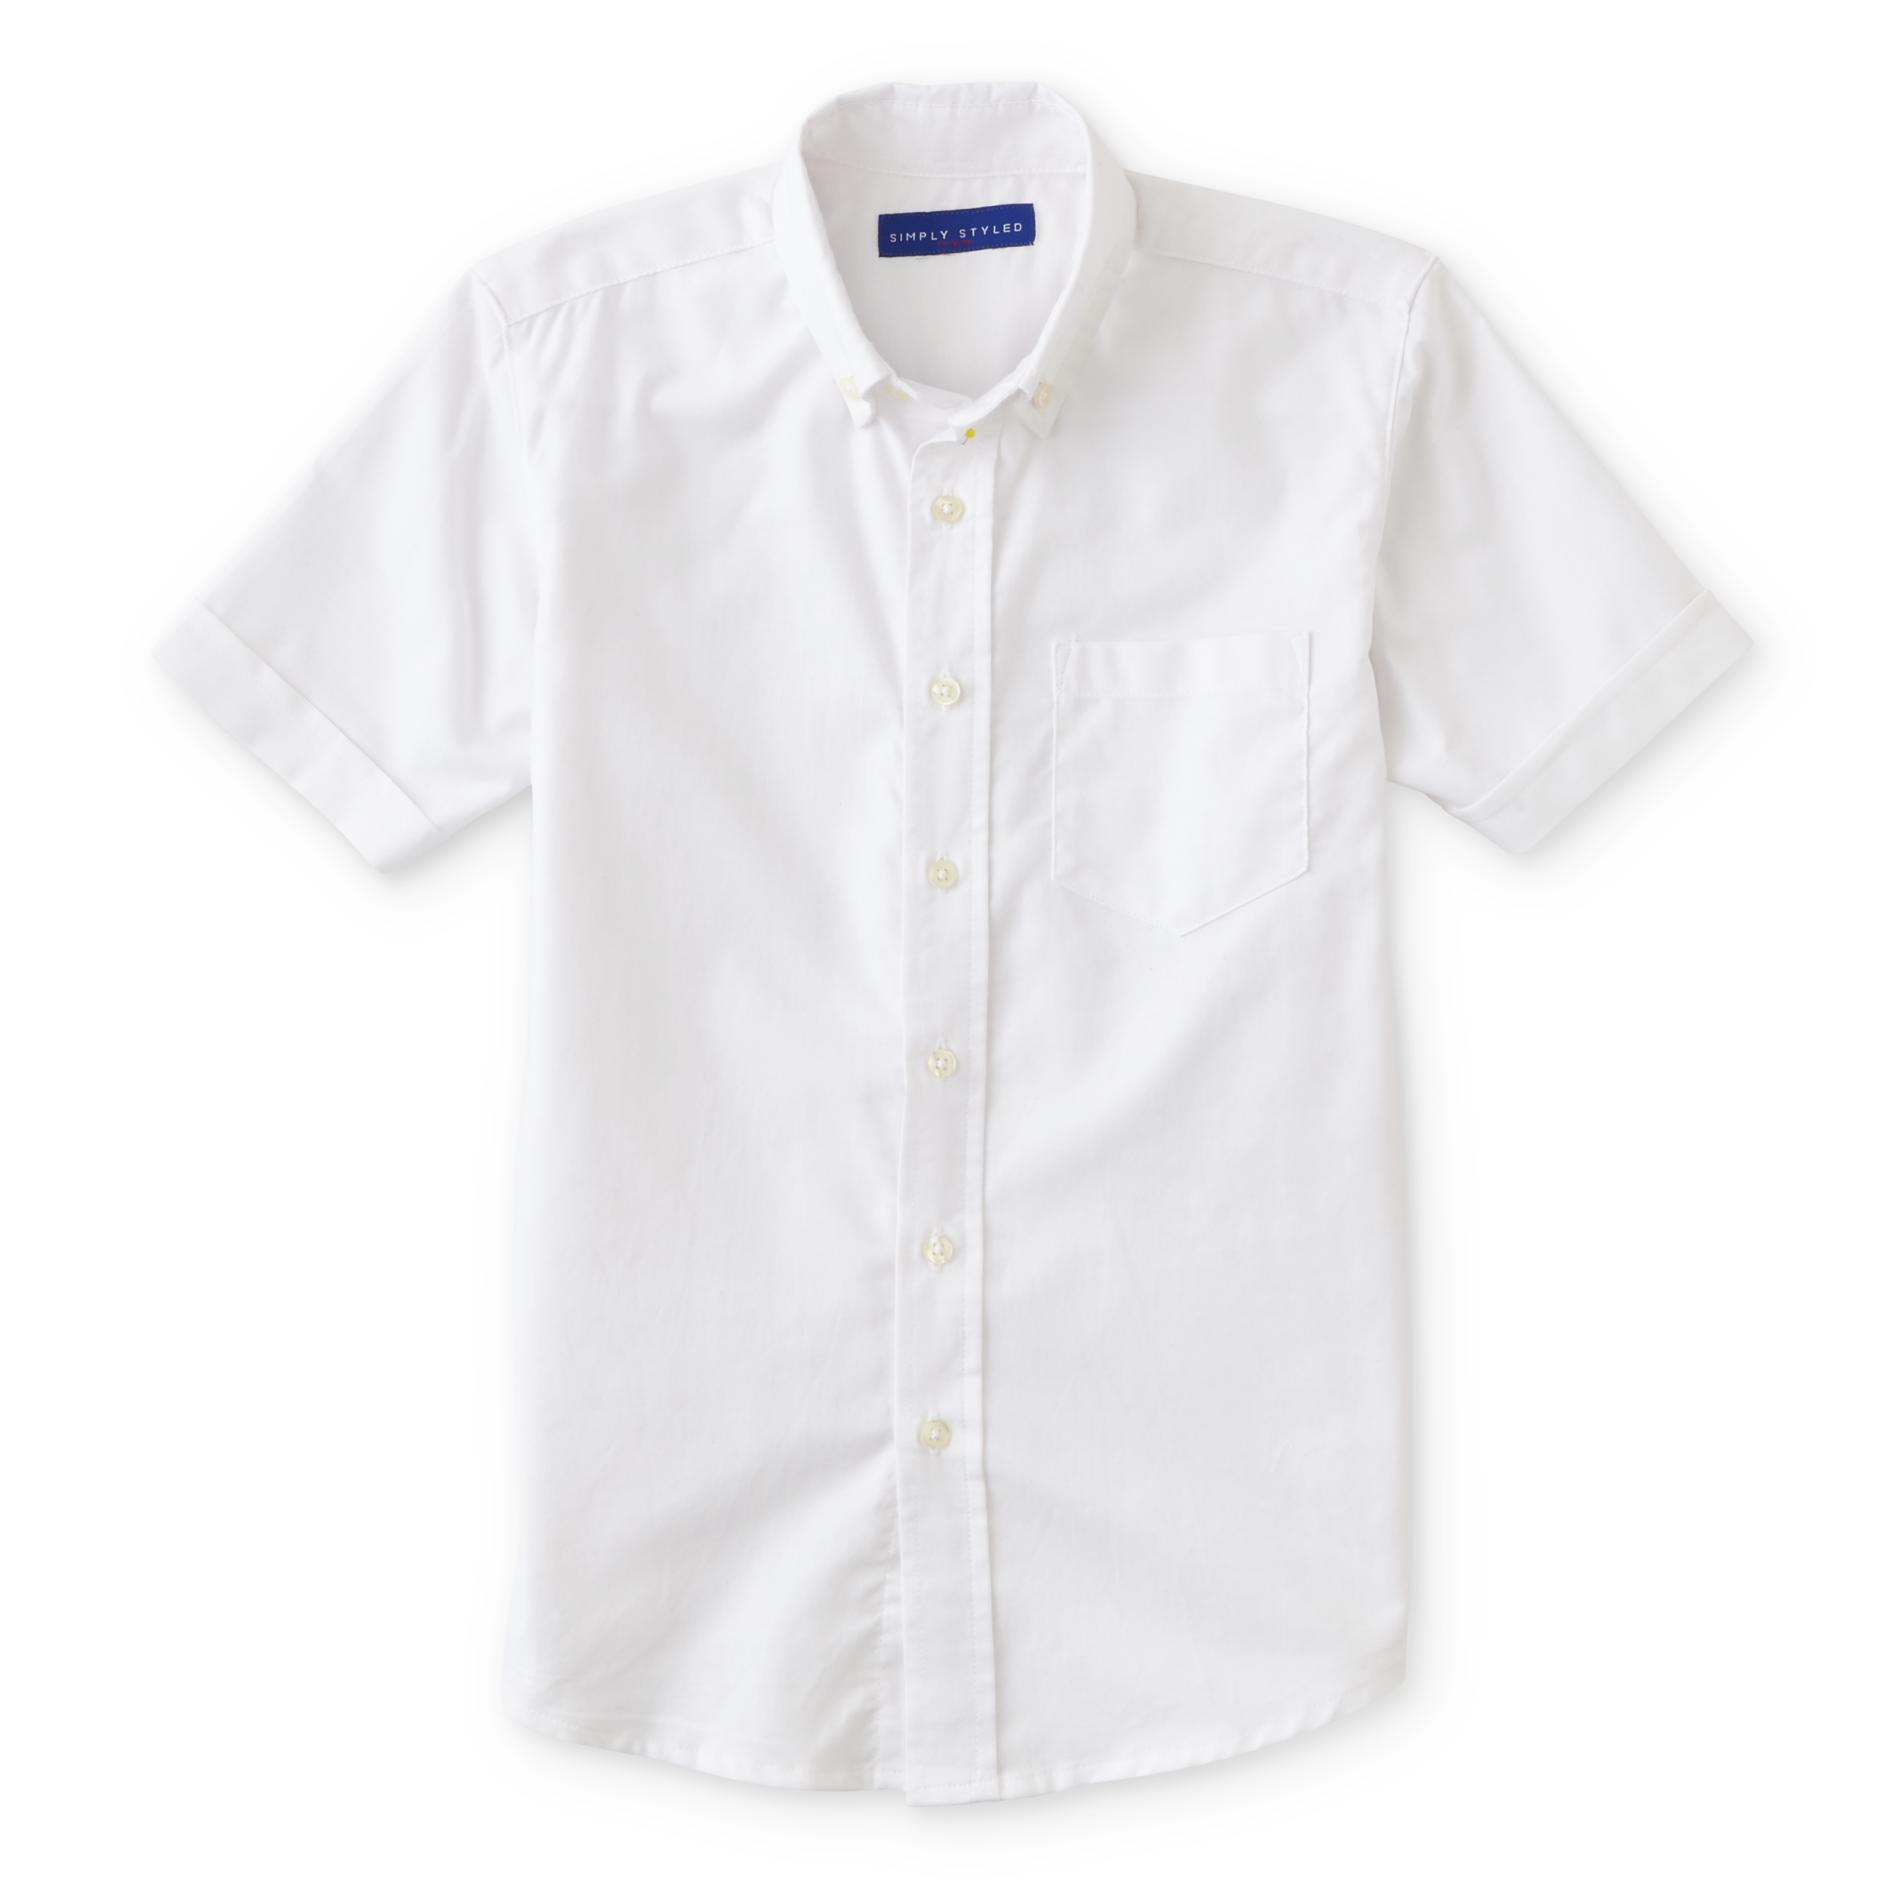 Simply Styled Boys' Short-Sleeve Woven Shirt